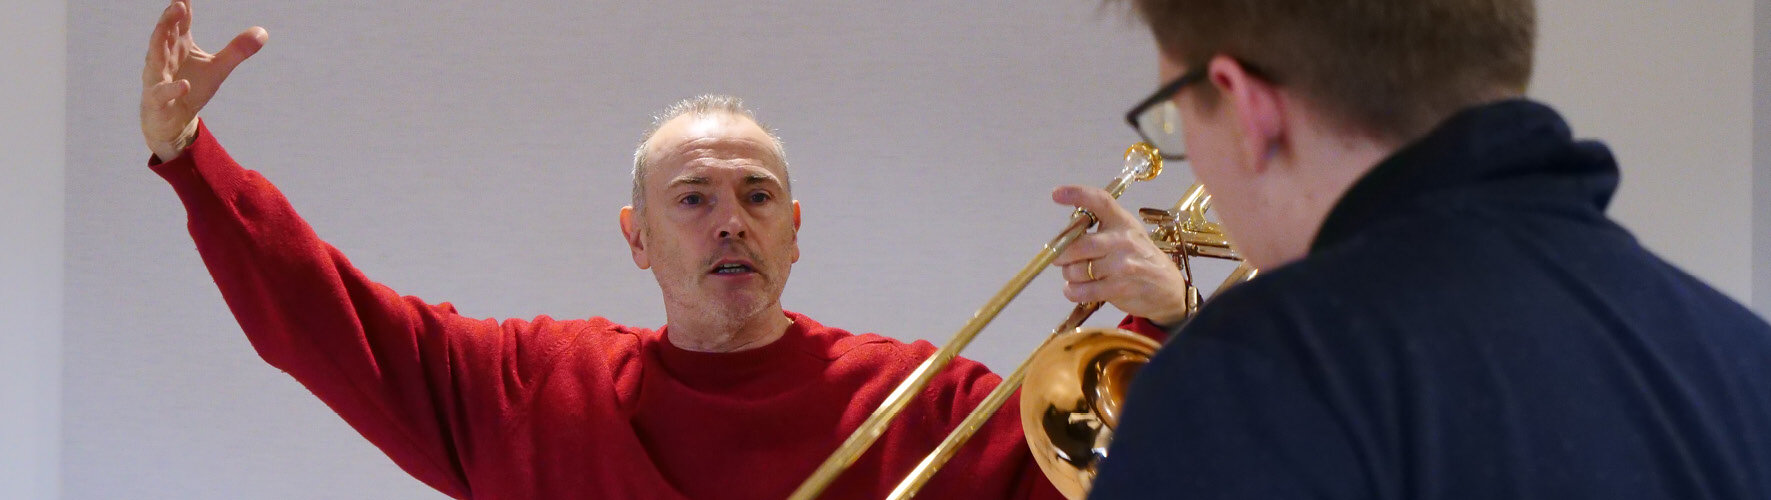 Trombone teacher and masterclasses